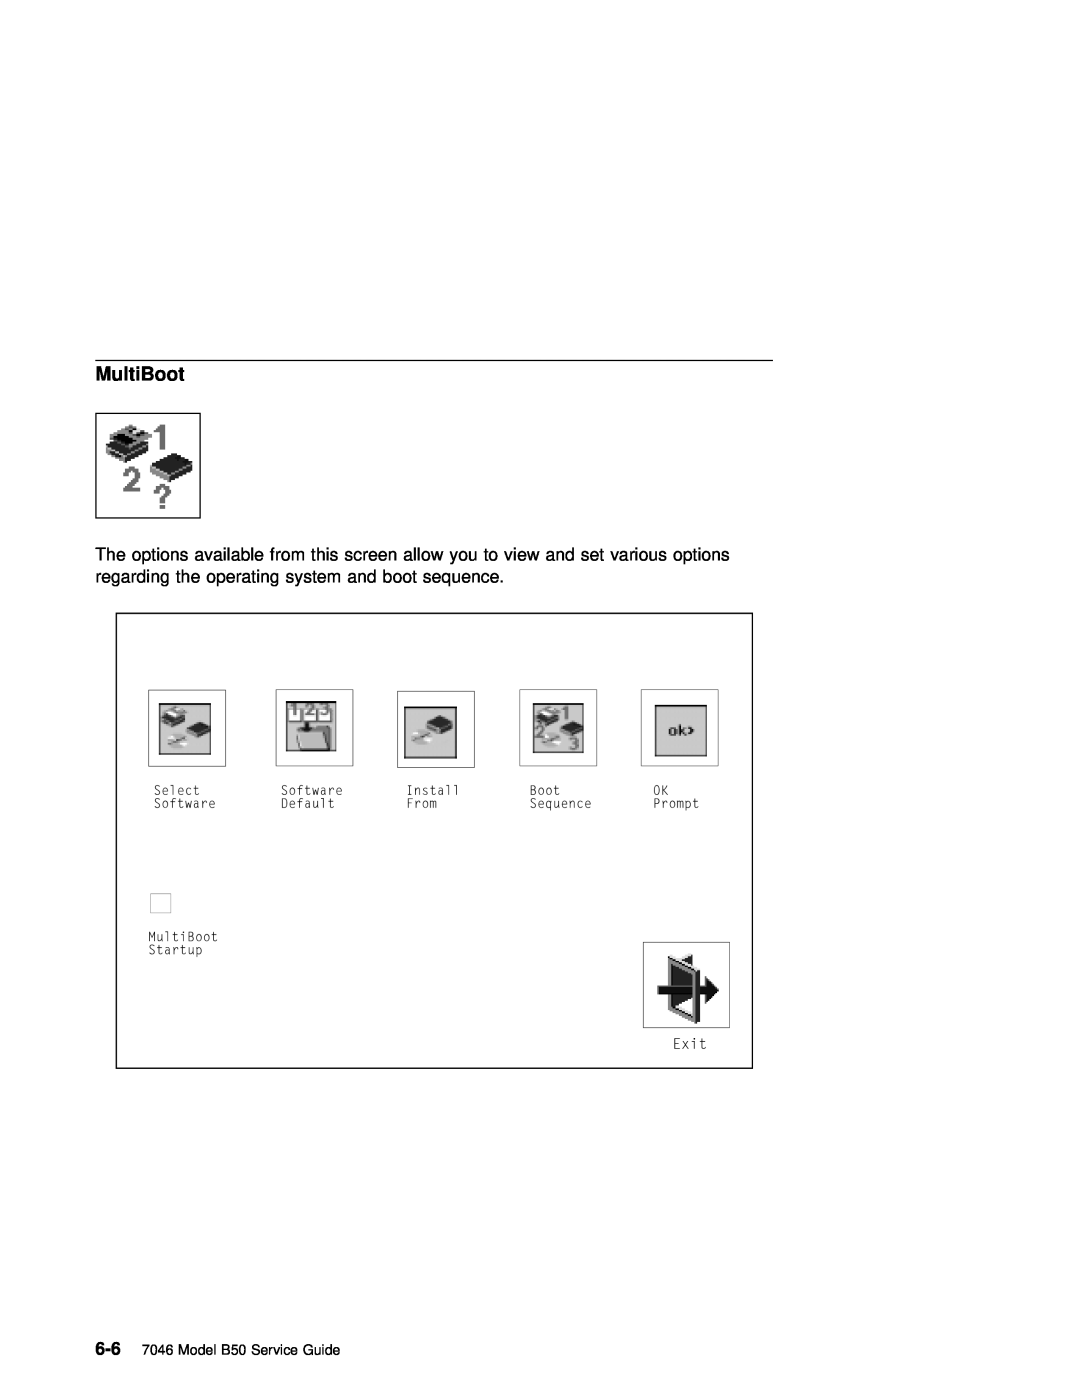 IBM manual MultiBoot, 6-6 7046 Model B50 Service Guide 